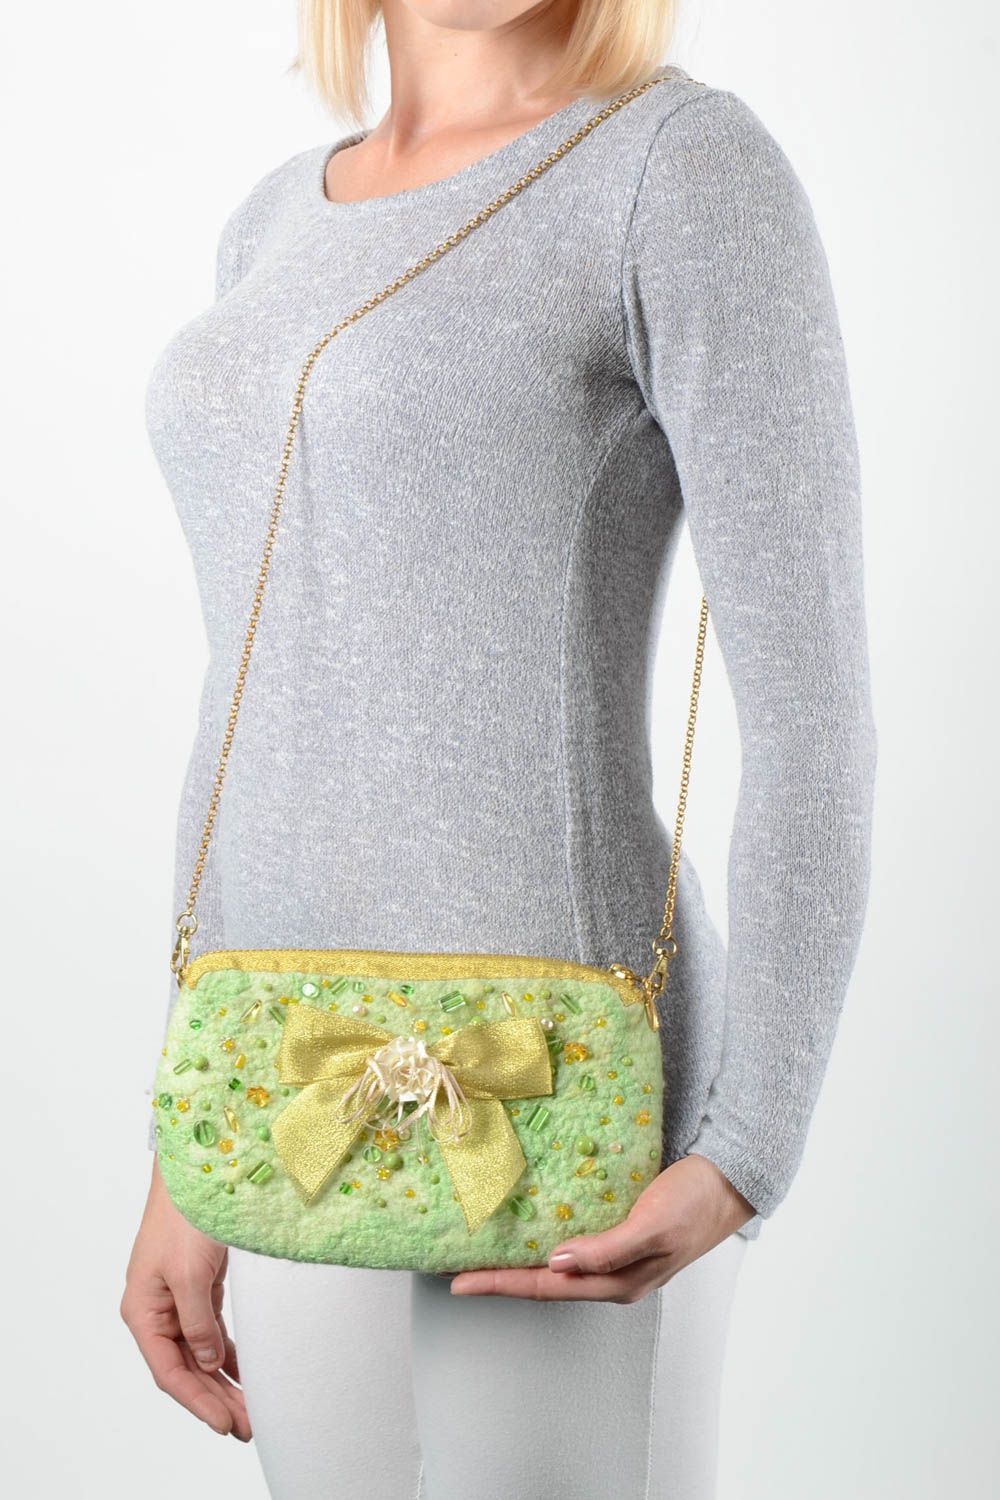 Woolen female bag stylish handmade bag unusual designer accessory cute bag photo 1